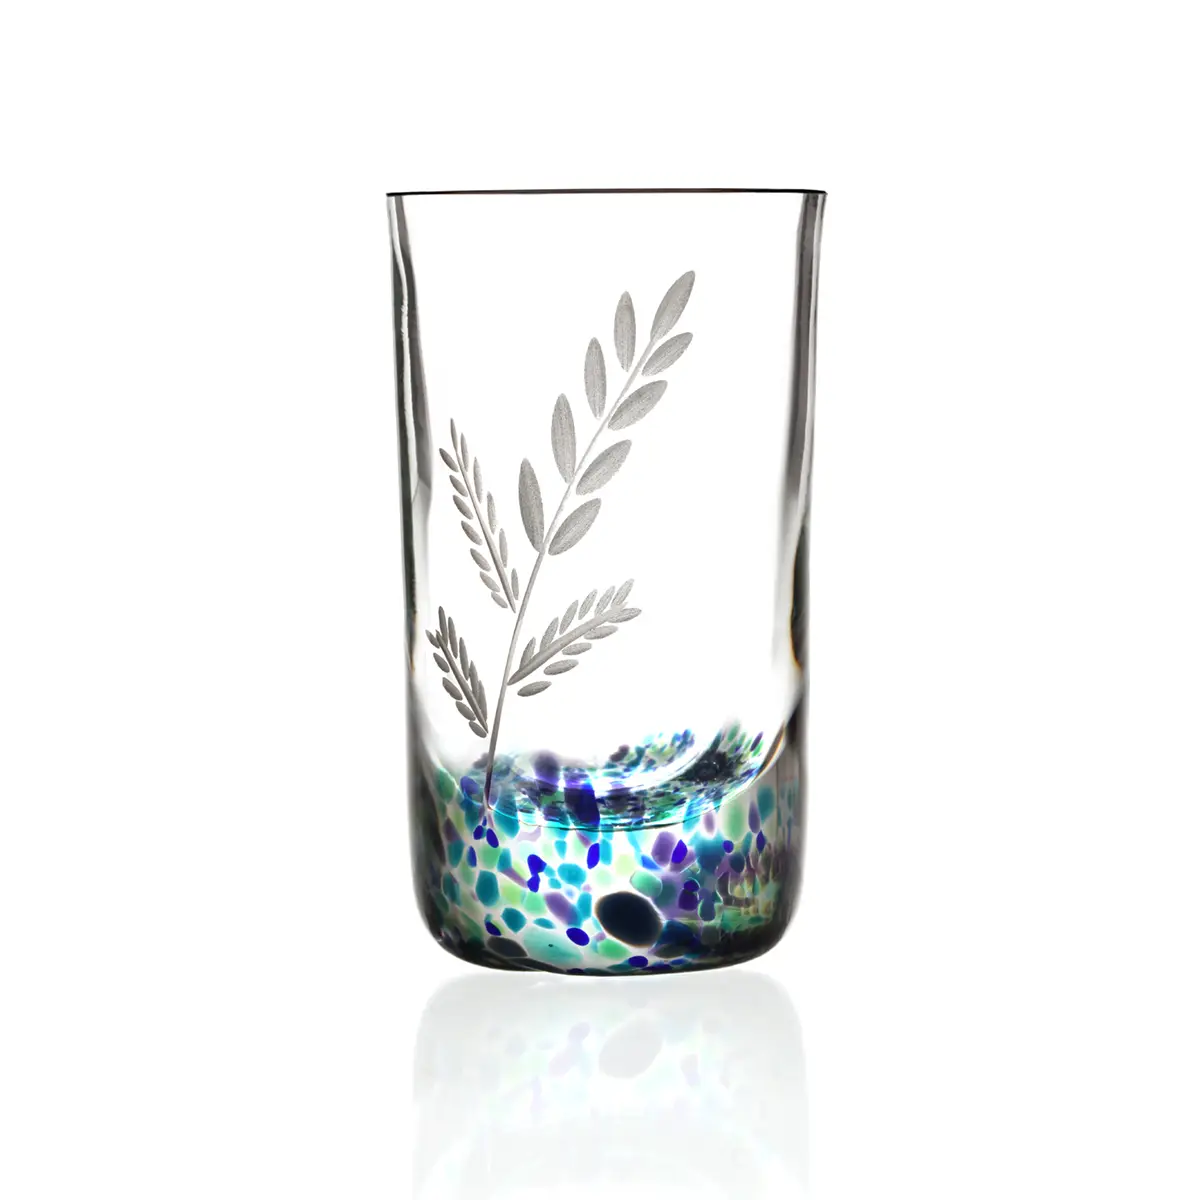 Wild Atlantic Way - Shotglas - Handgefertigtes Kristallglas aus Irland